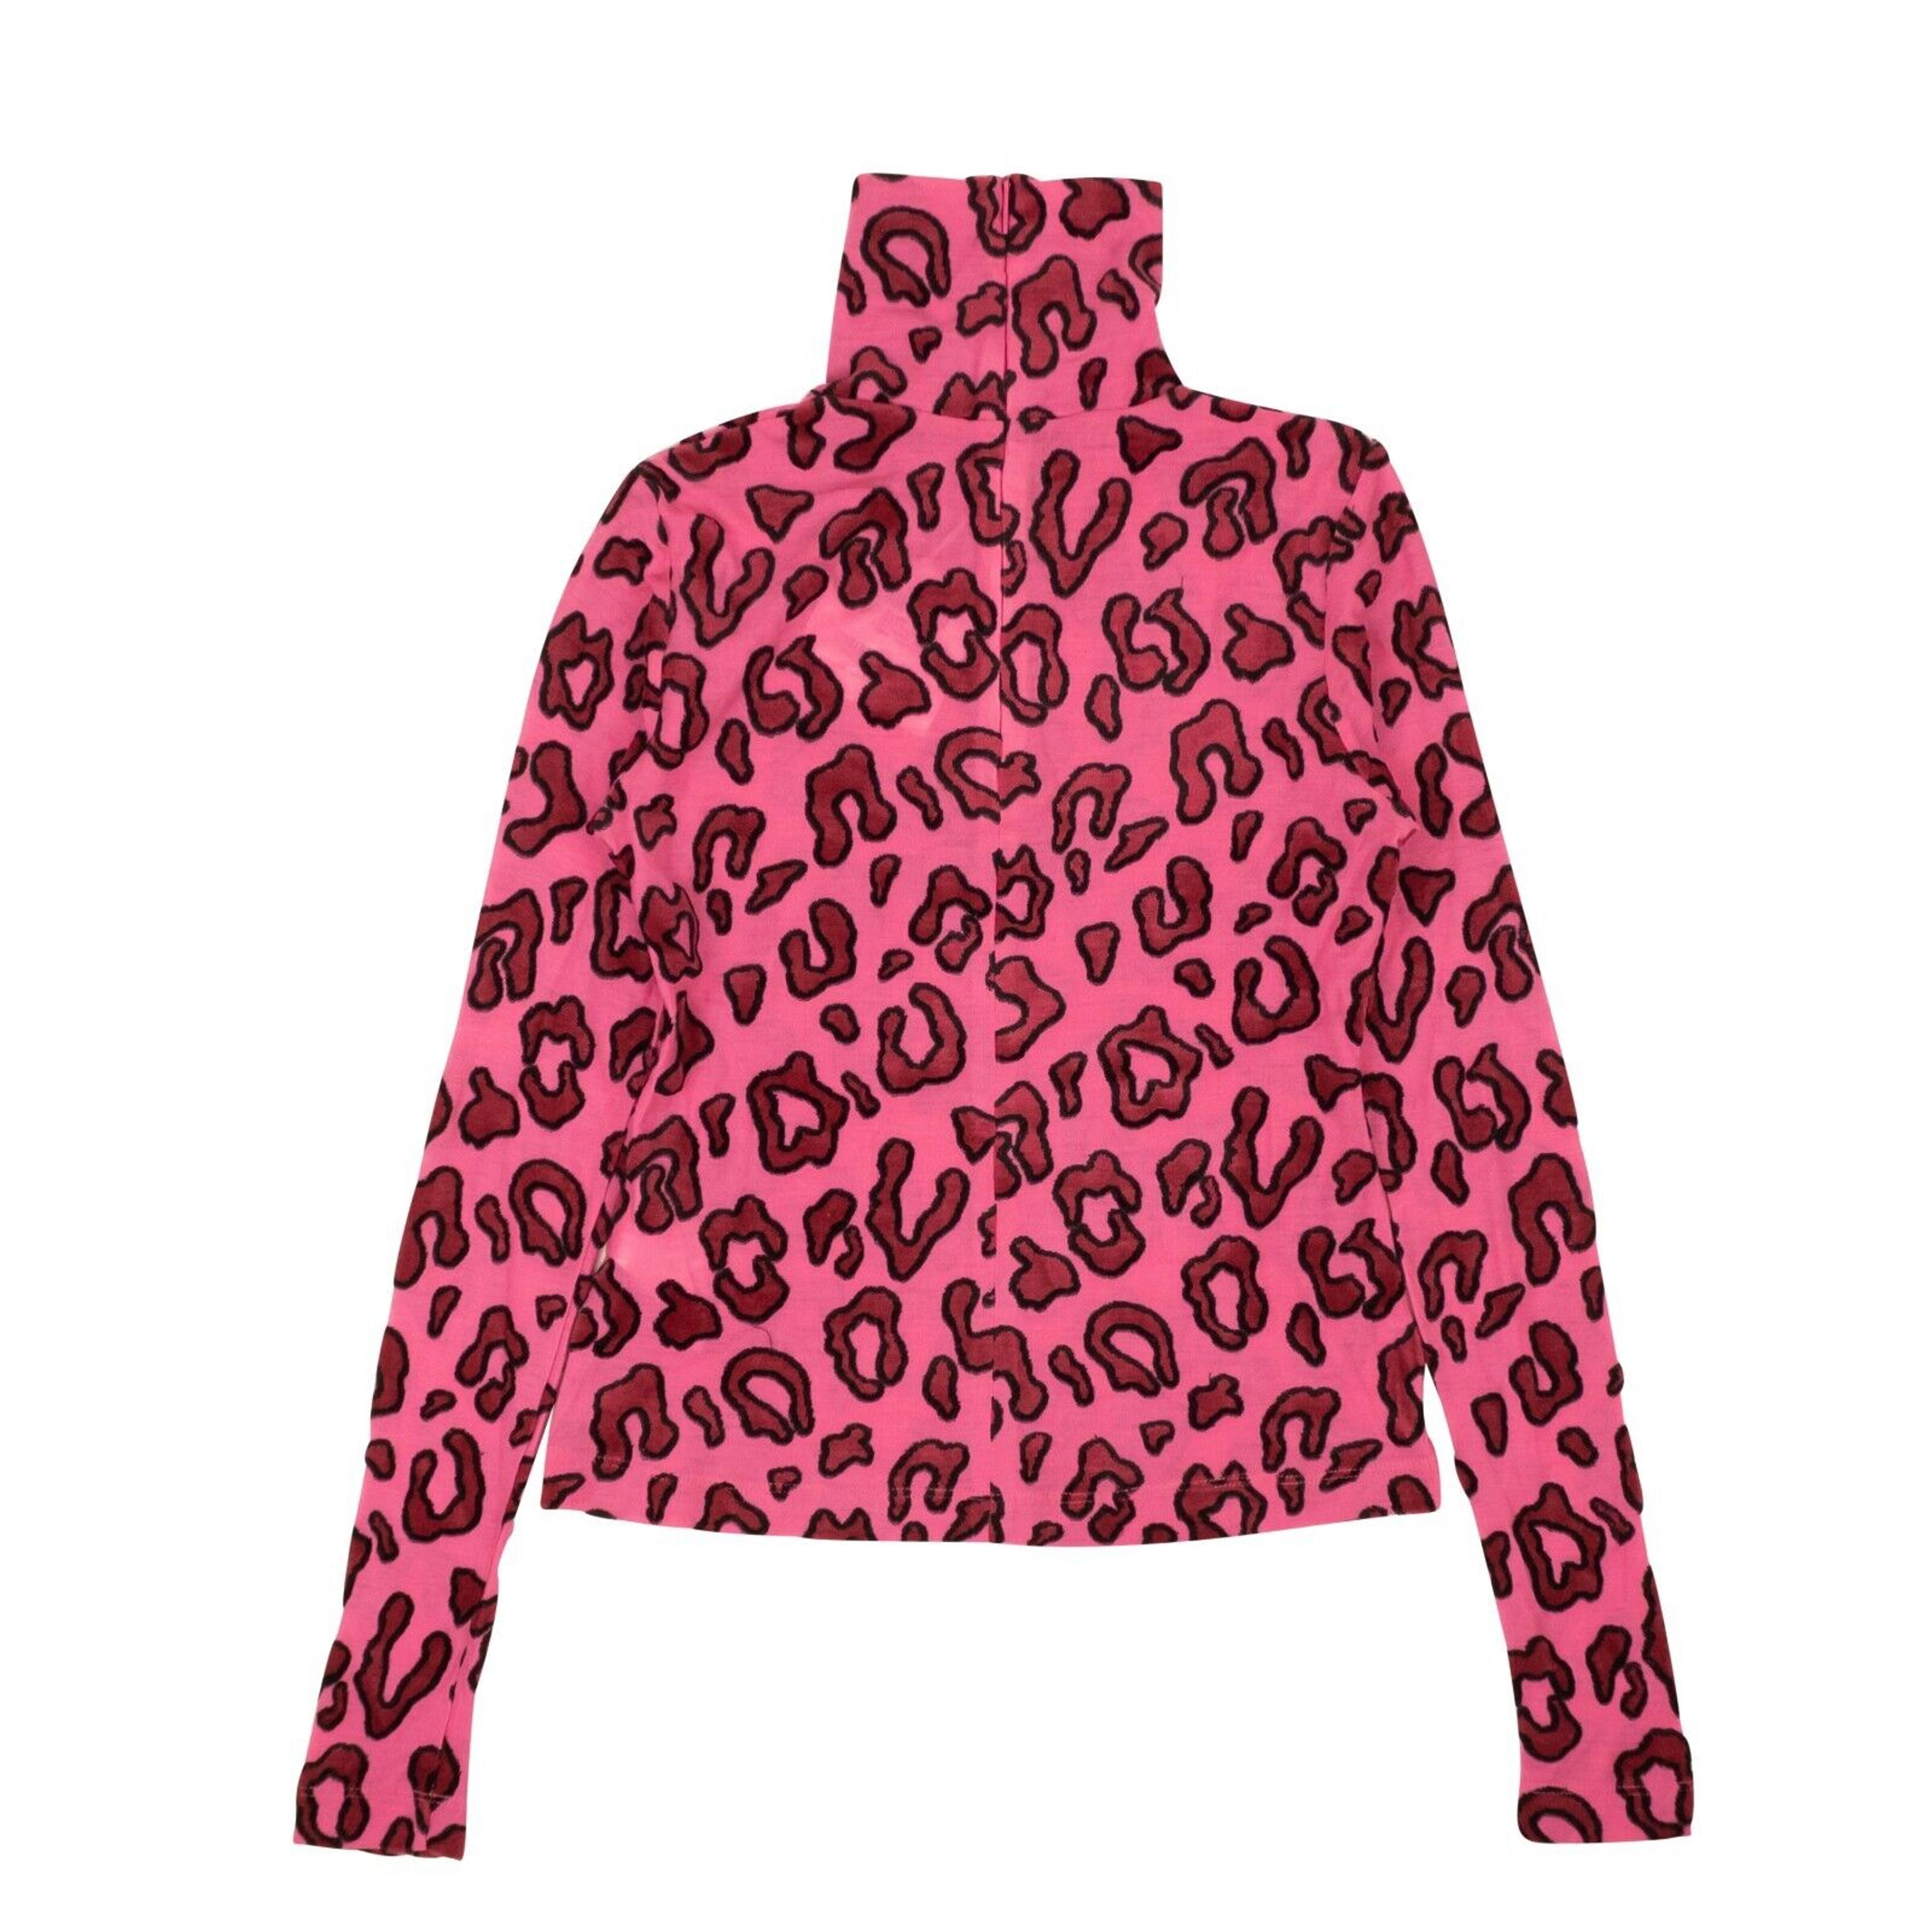 Alternate View 2 of Pink Acrylic Wool Leopard Print Turtleneck Top